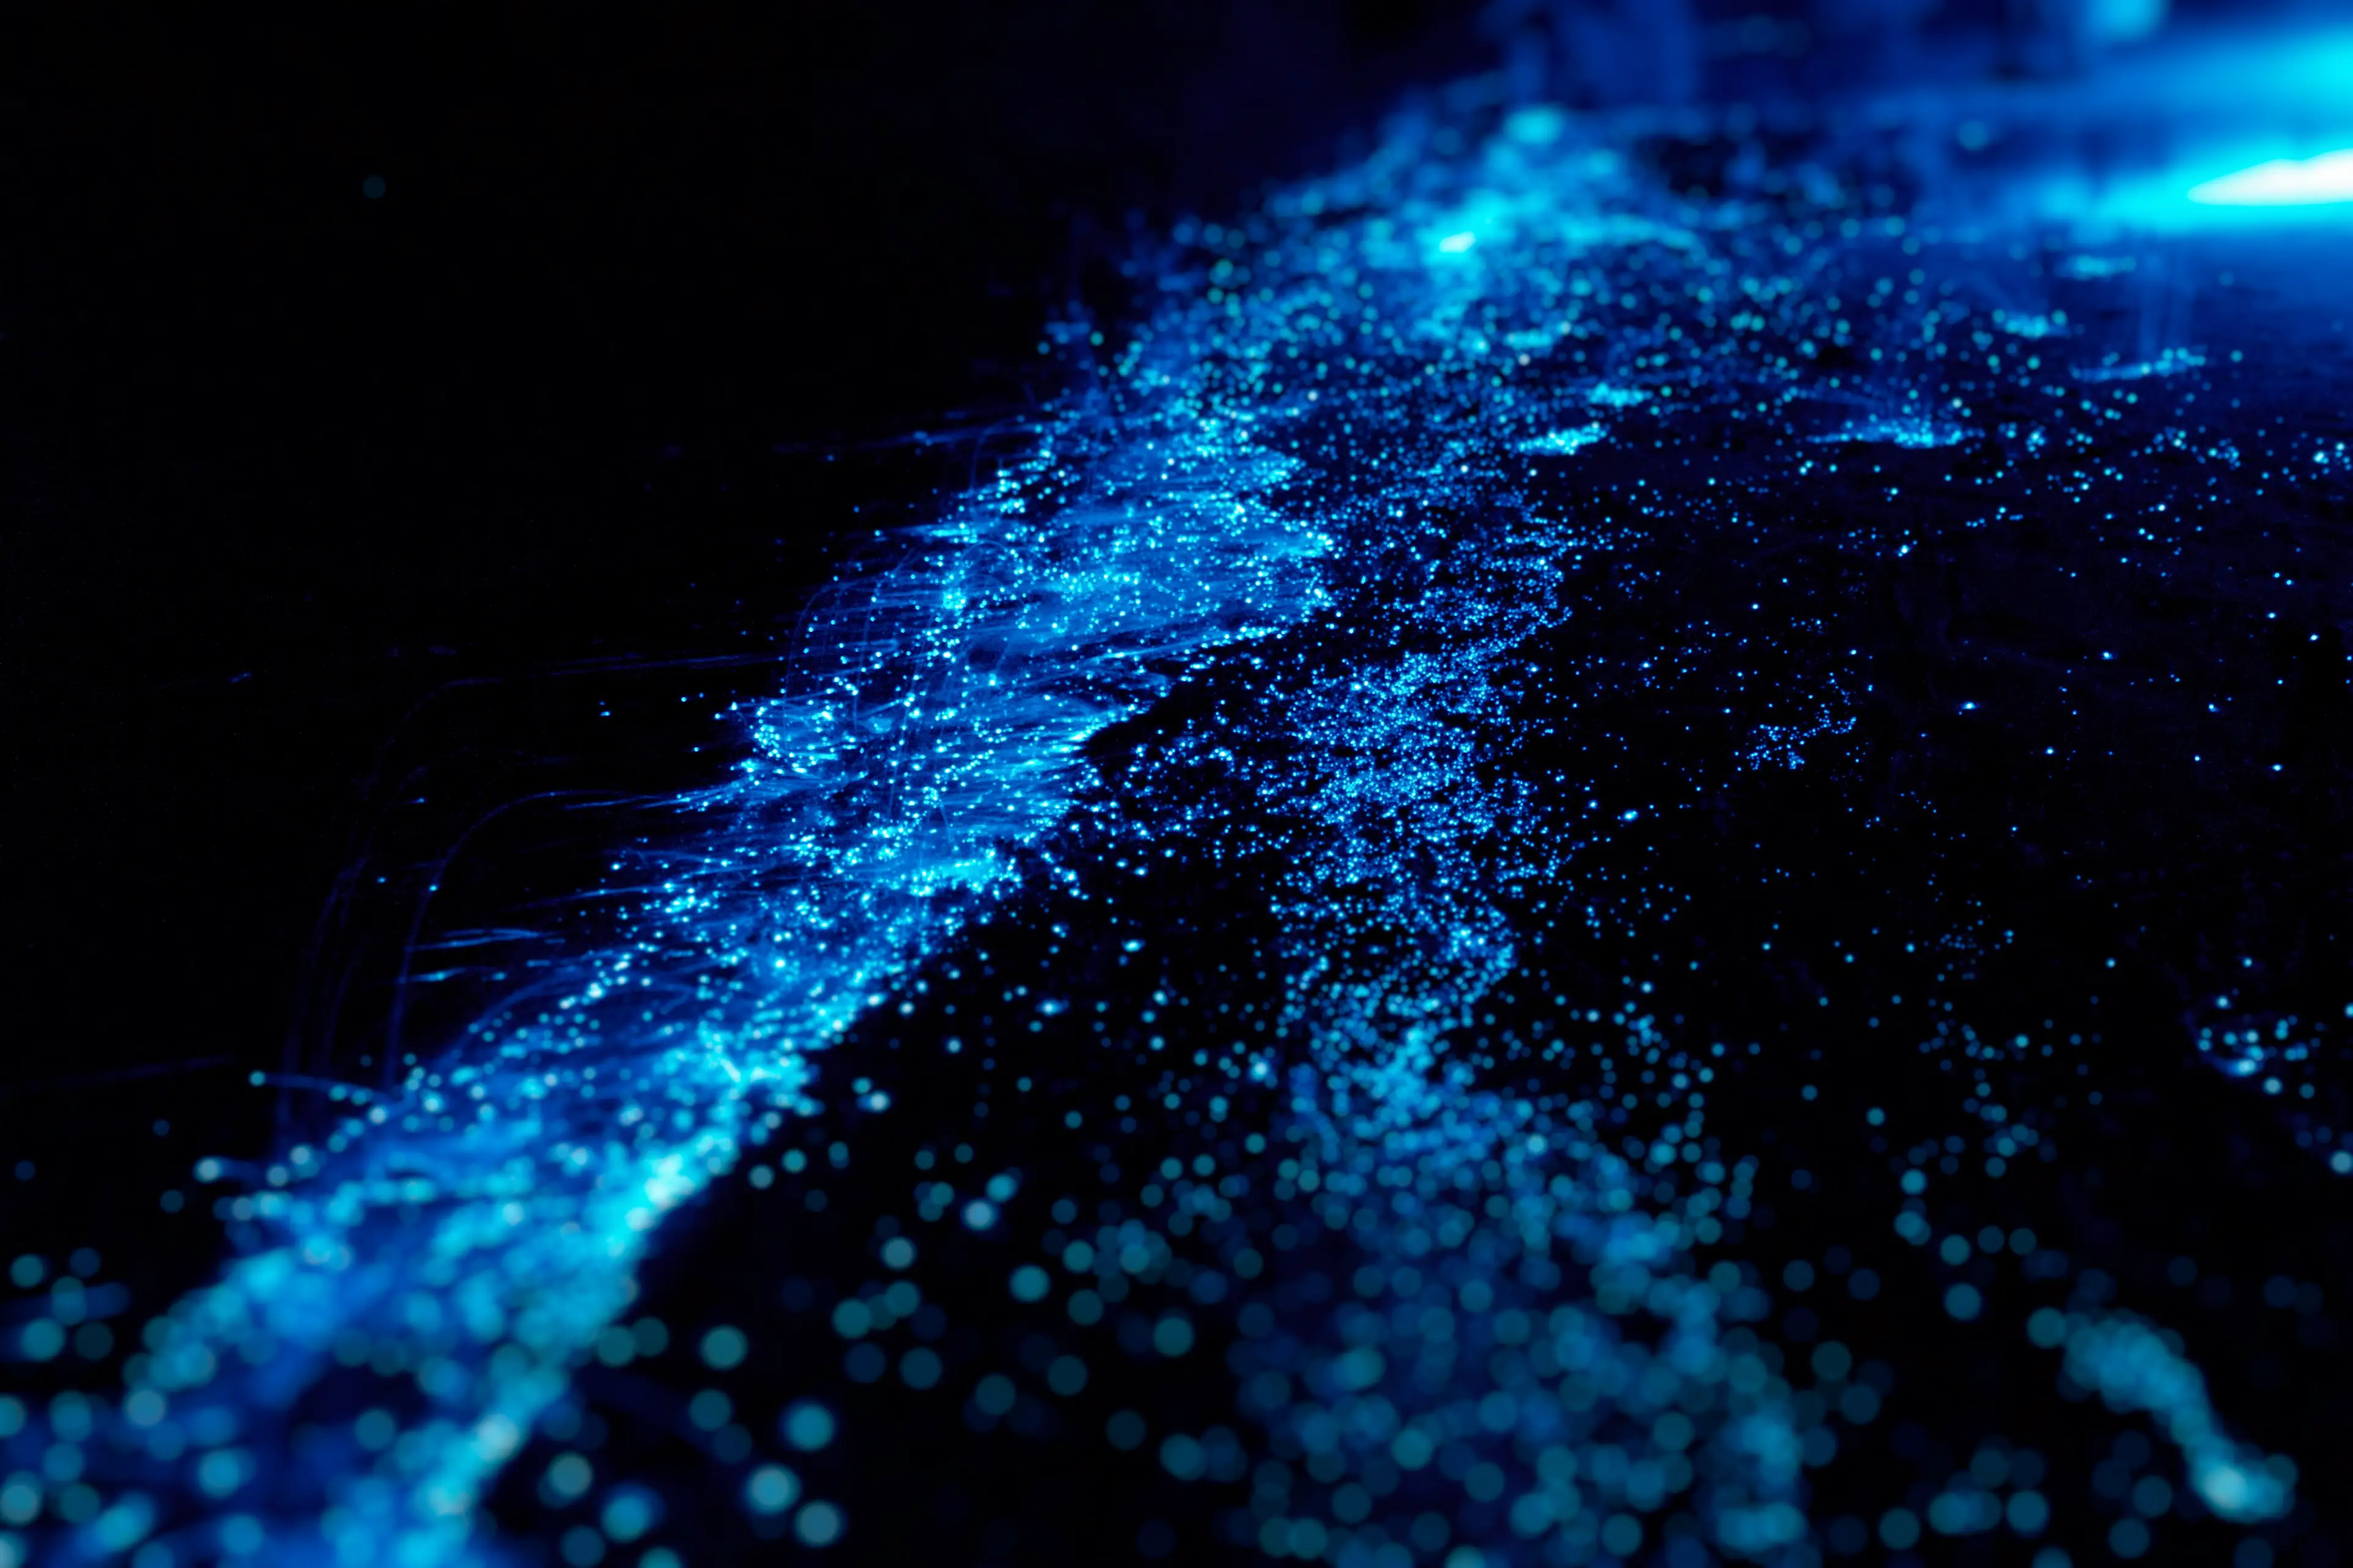 Bioluminescence in the ocean, iStock